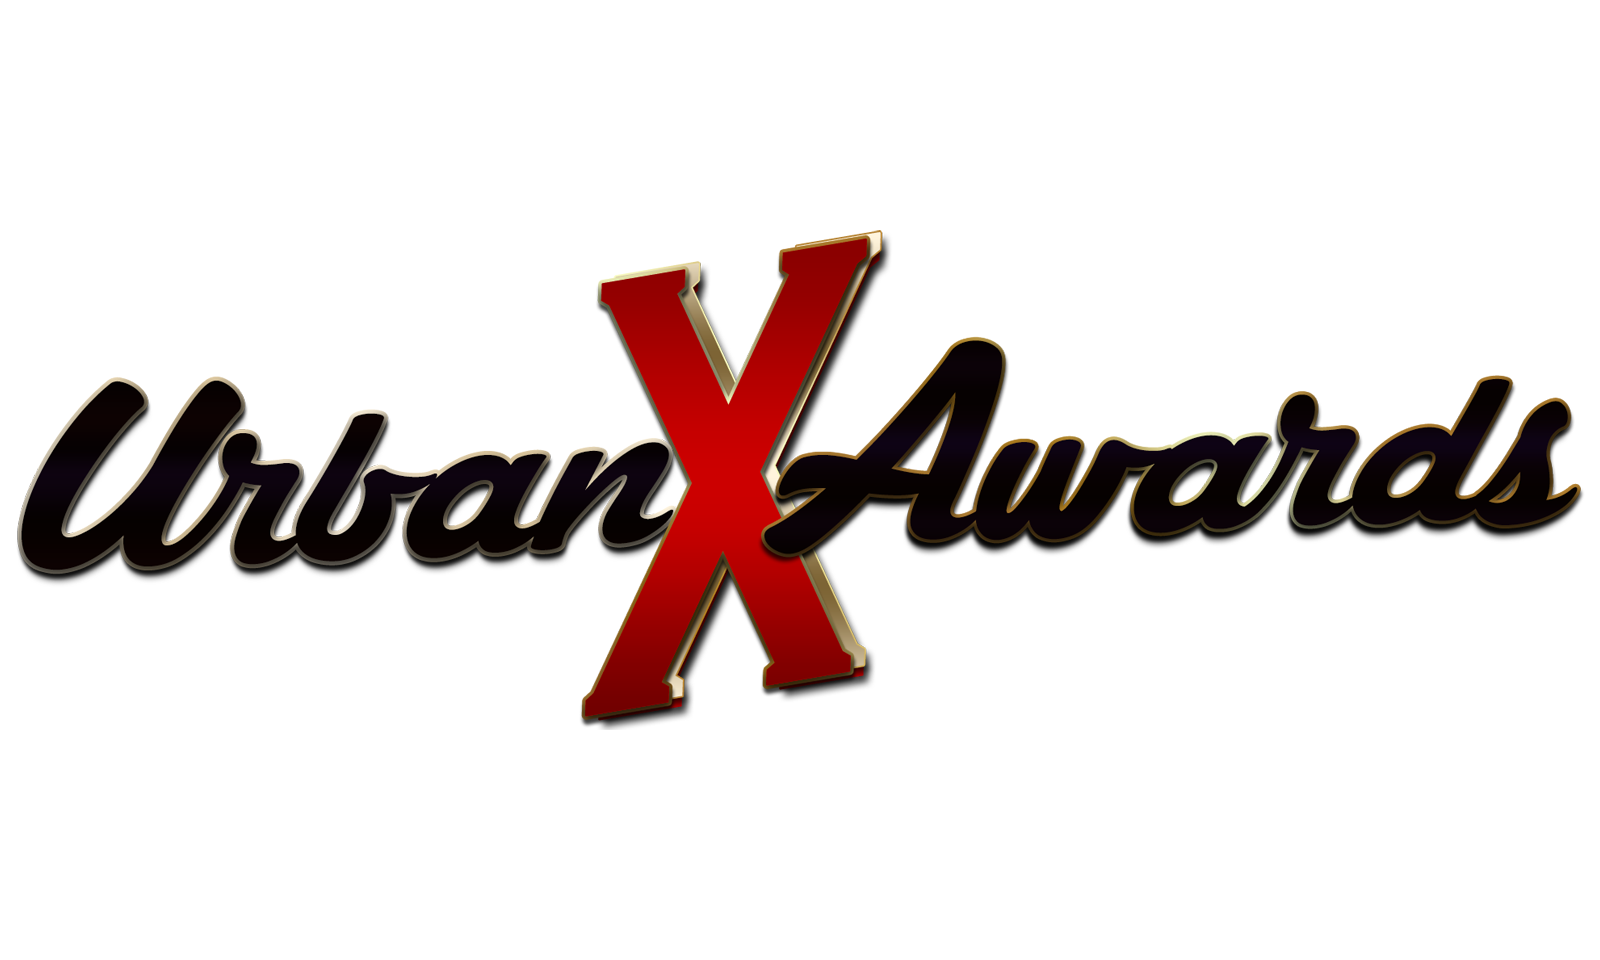 2023 Urban X Award Winners Announced